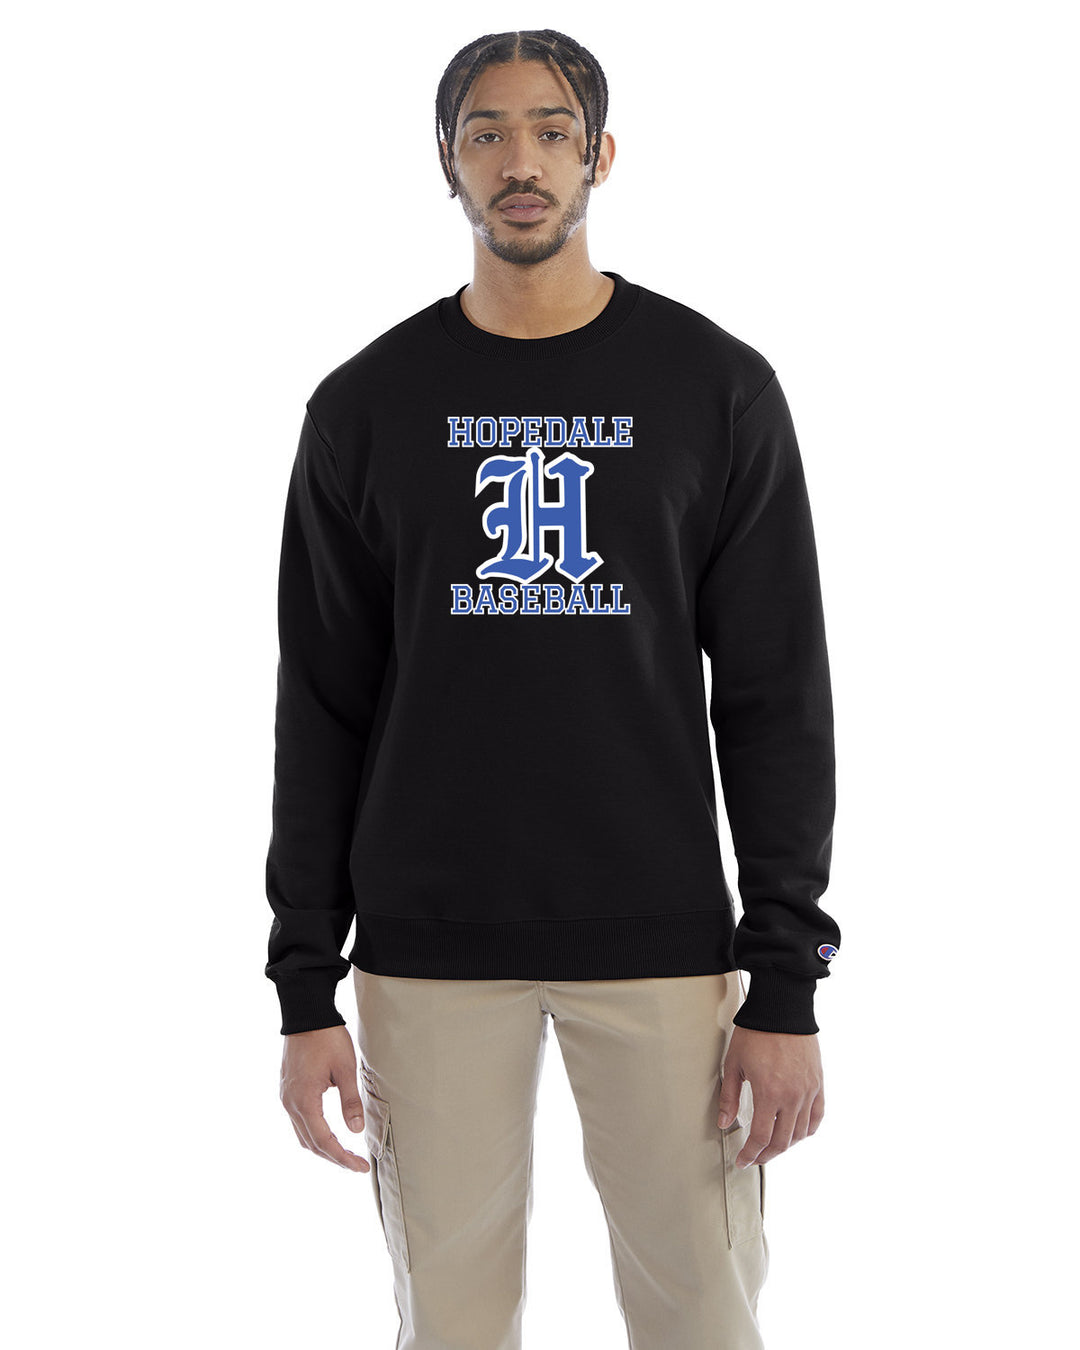 Hopedale Baseball - Champion Crewneck Sweatshirt (S600)